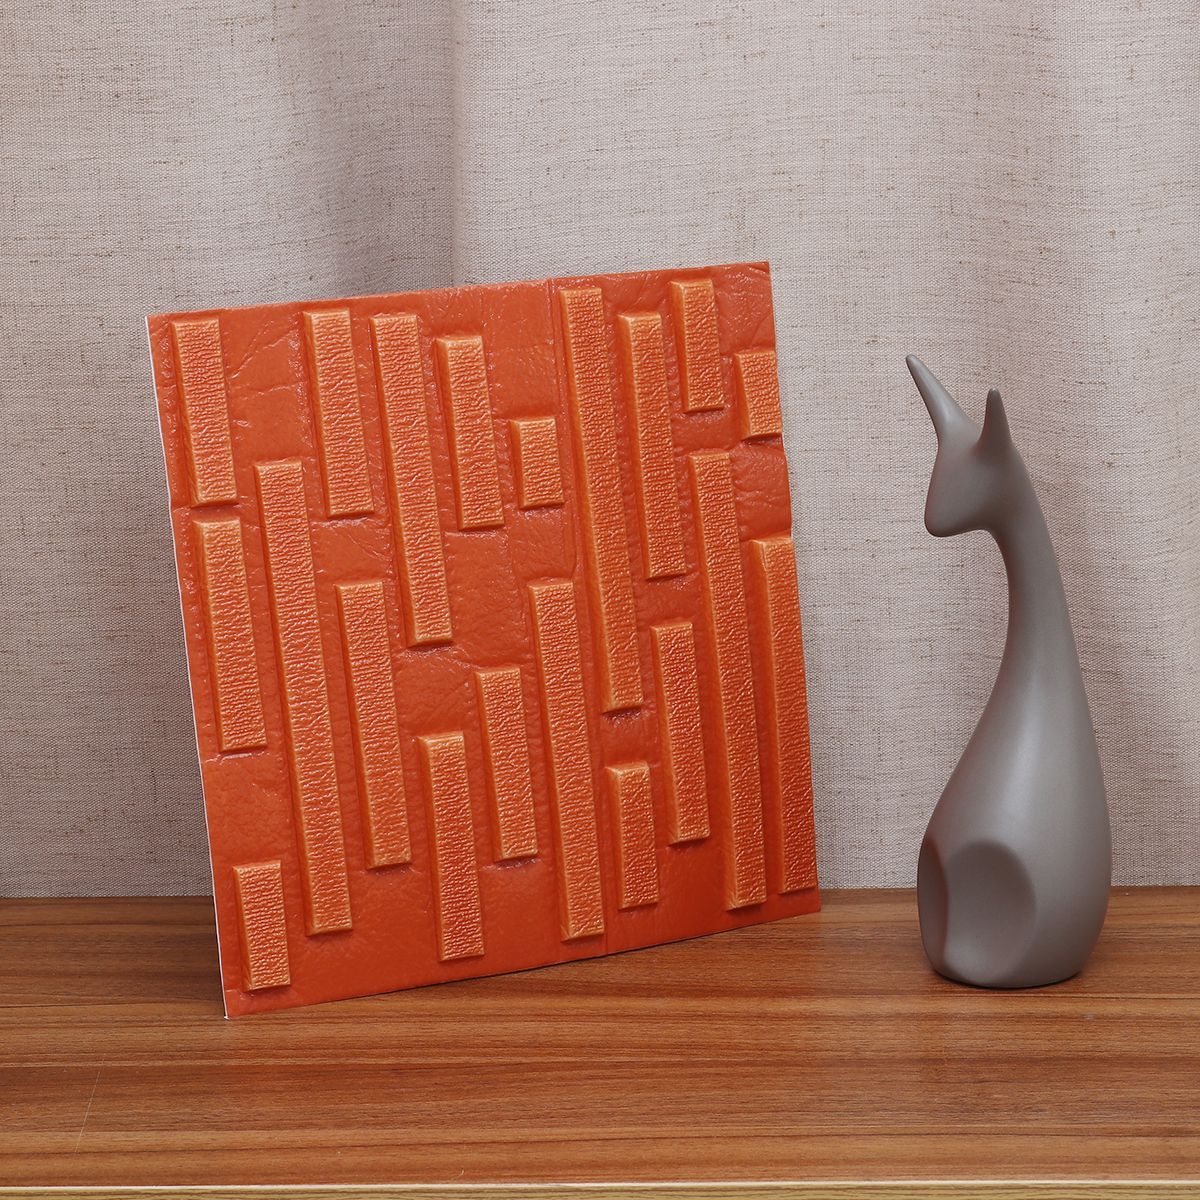 3D-Self-adhesive-Wall-Sticker-Foam-Brick-Pattern-Environmental-Wall-Sticker-Decorations-1536811